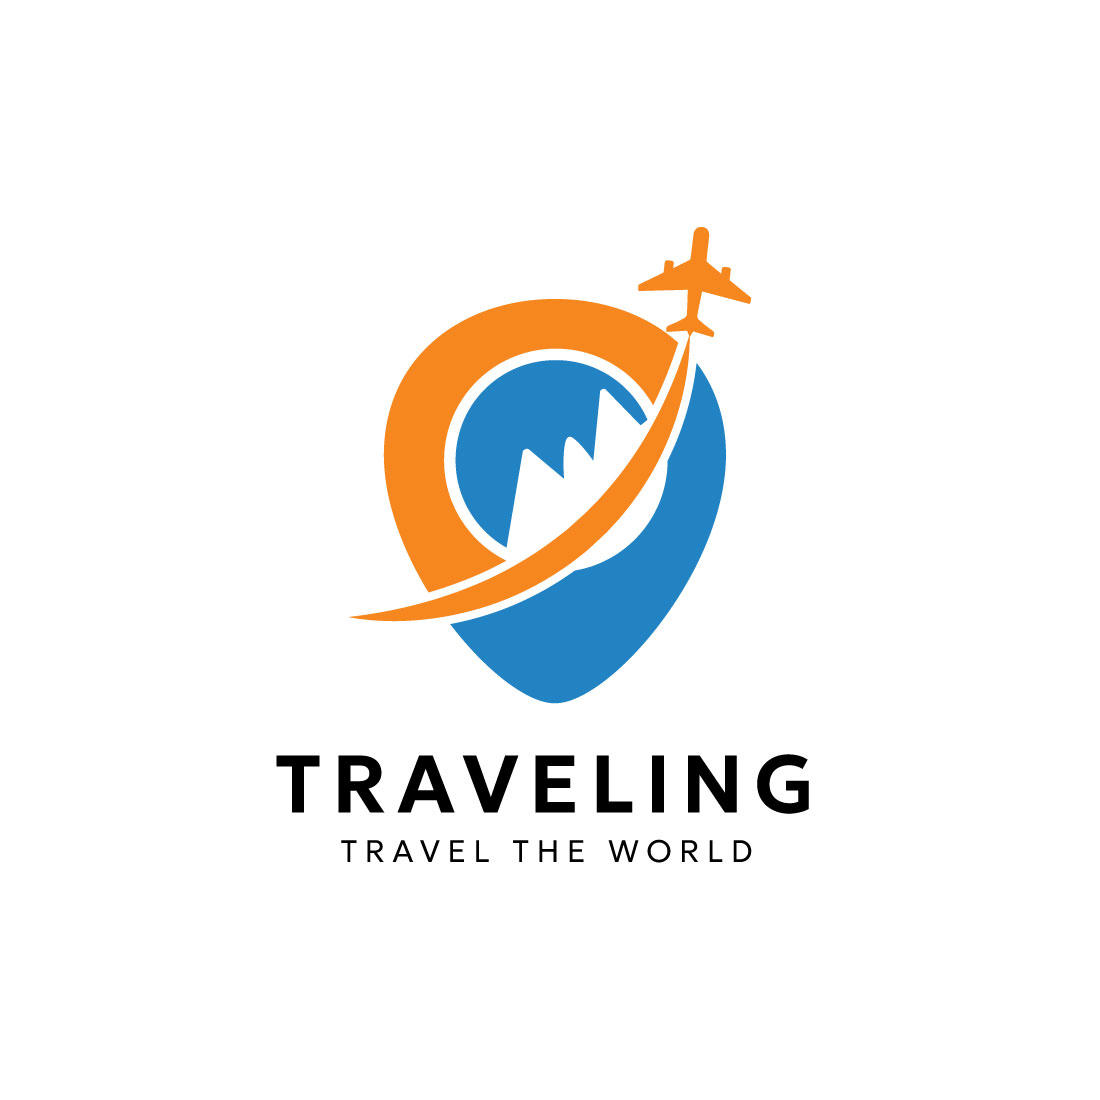 Travel world modern logo design preview image.